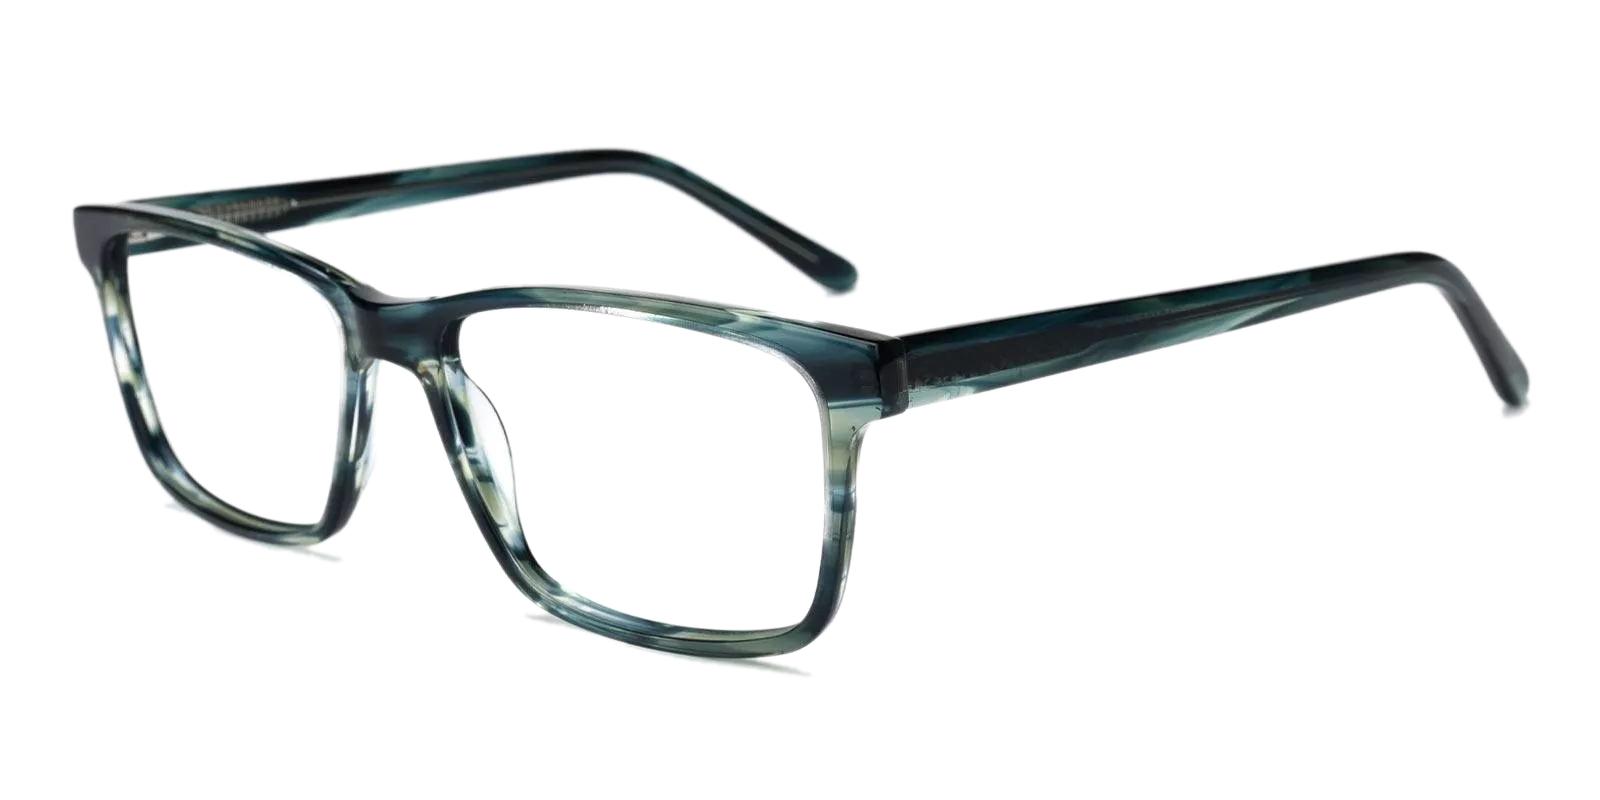 Moment Green Acetate Eyeglasses , Fashion , SpringHinges , UniversalBridgeFit Frames from ABBE Glasses